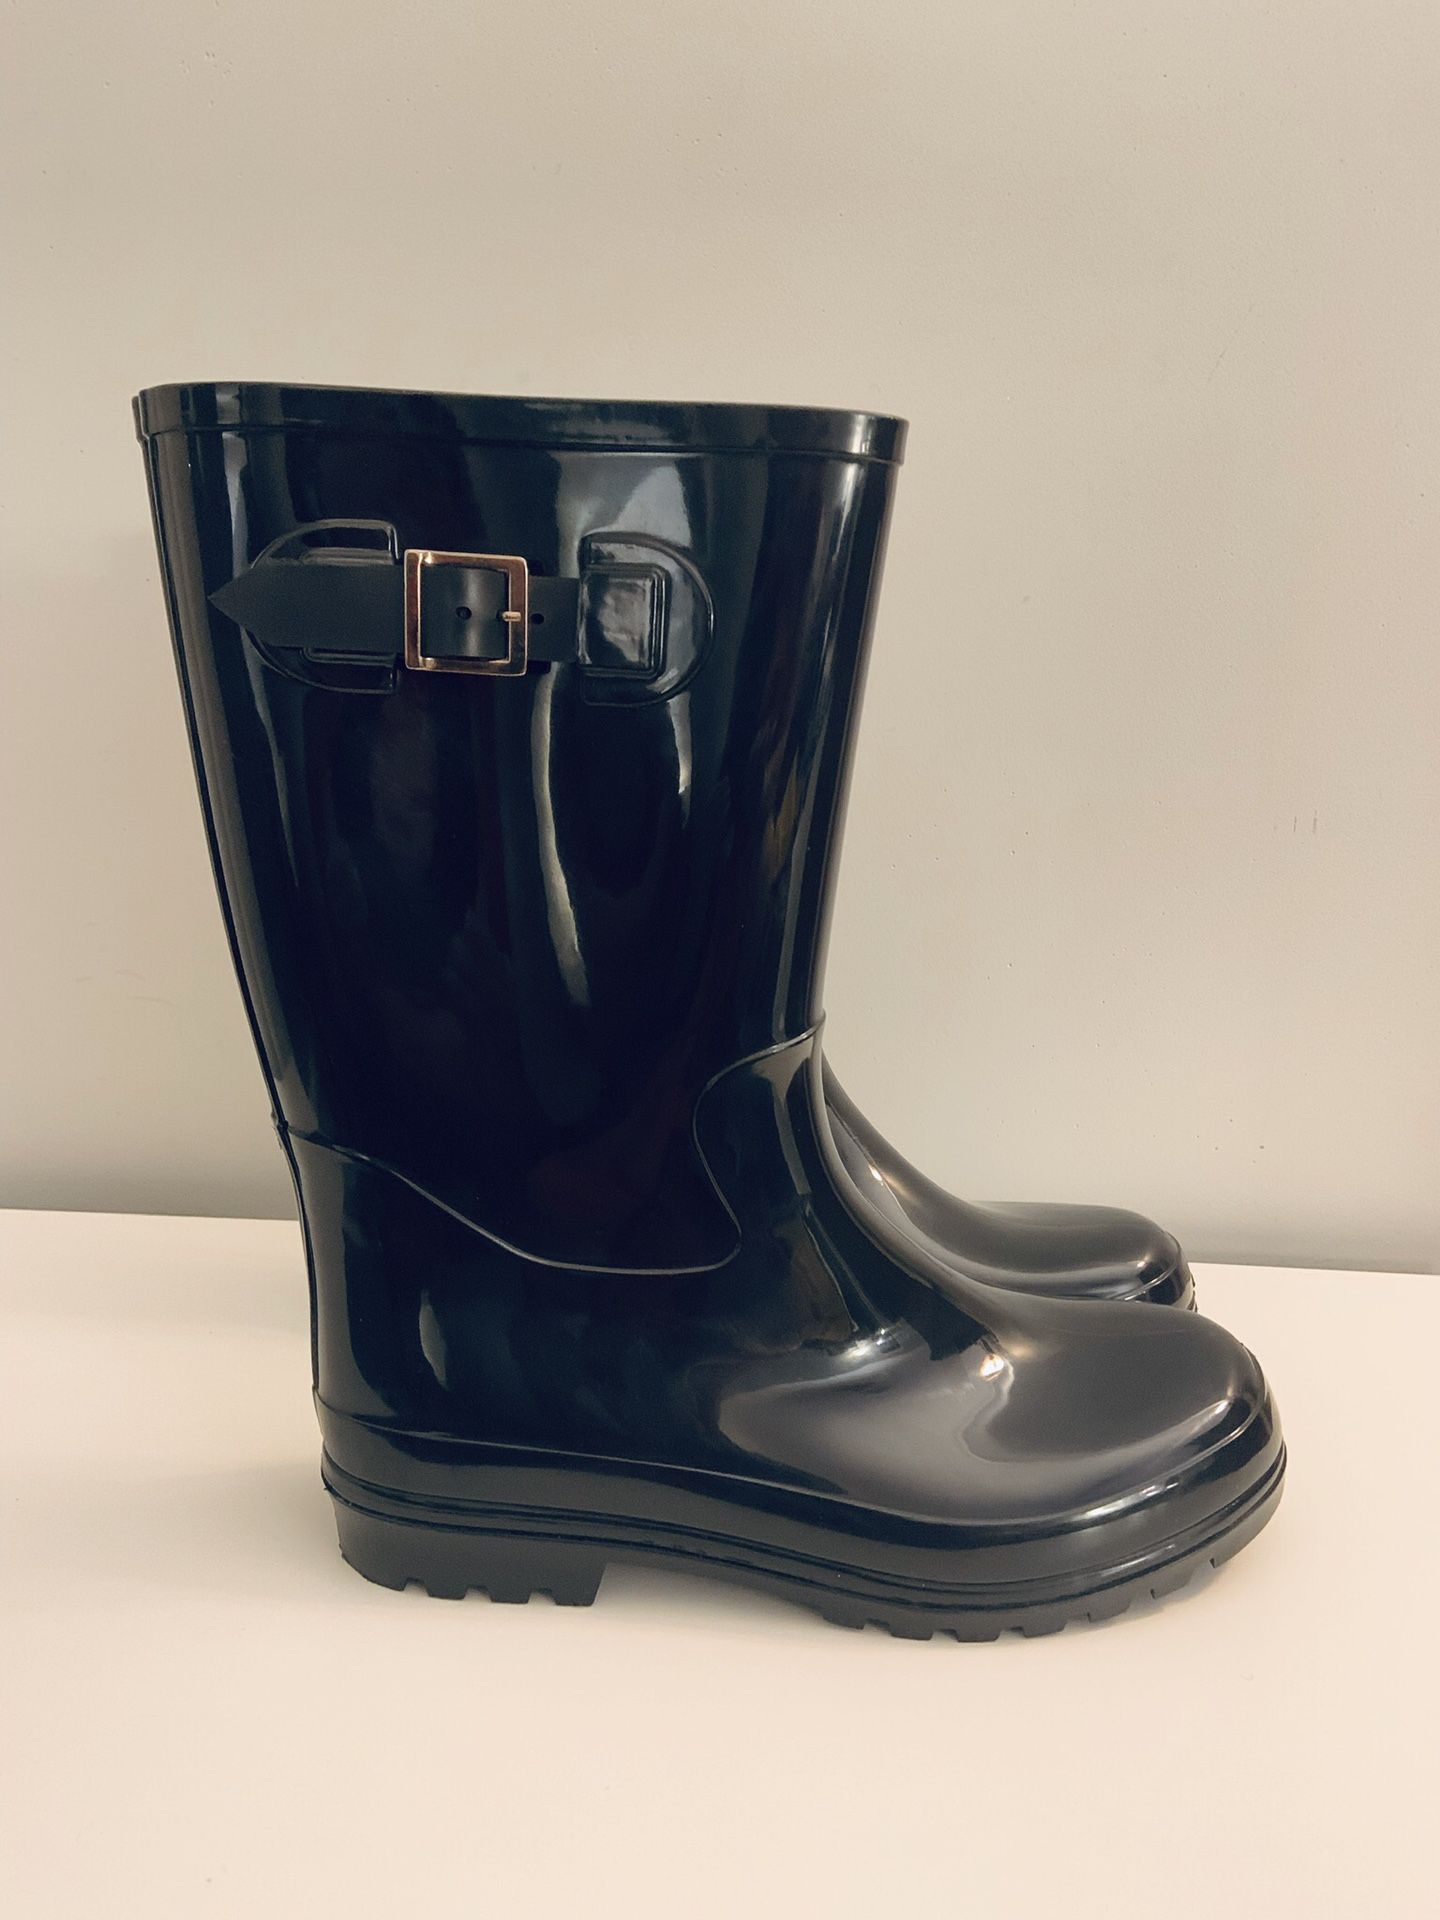 Women’s Rain Boots, black, size 11